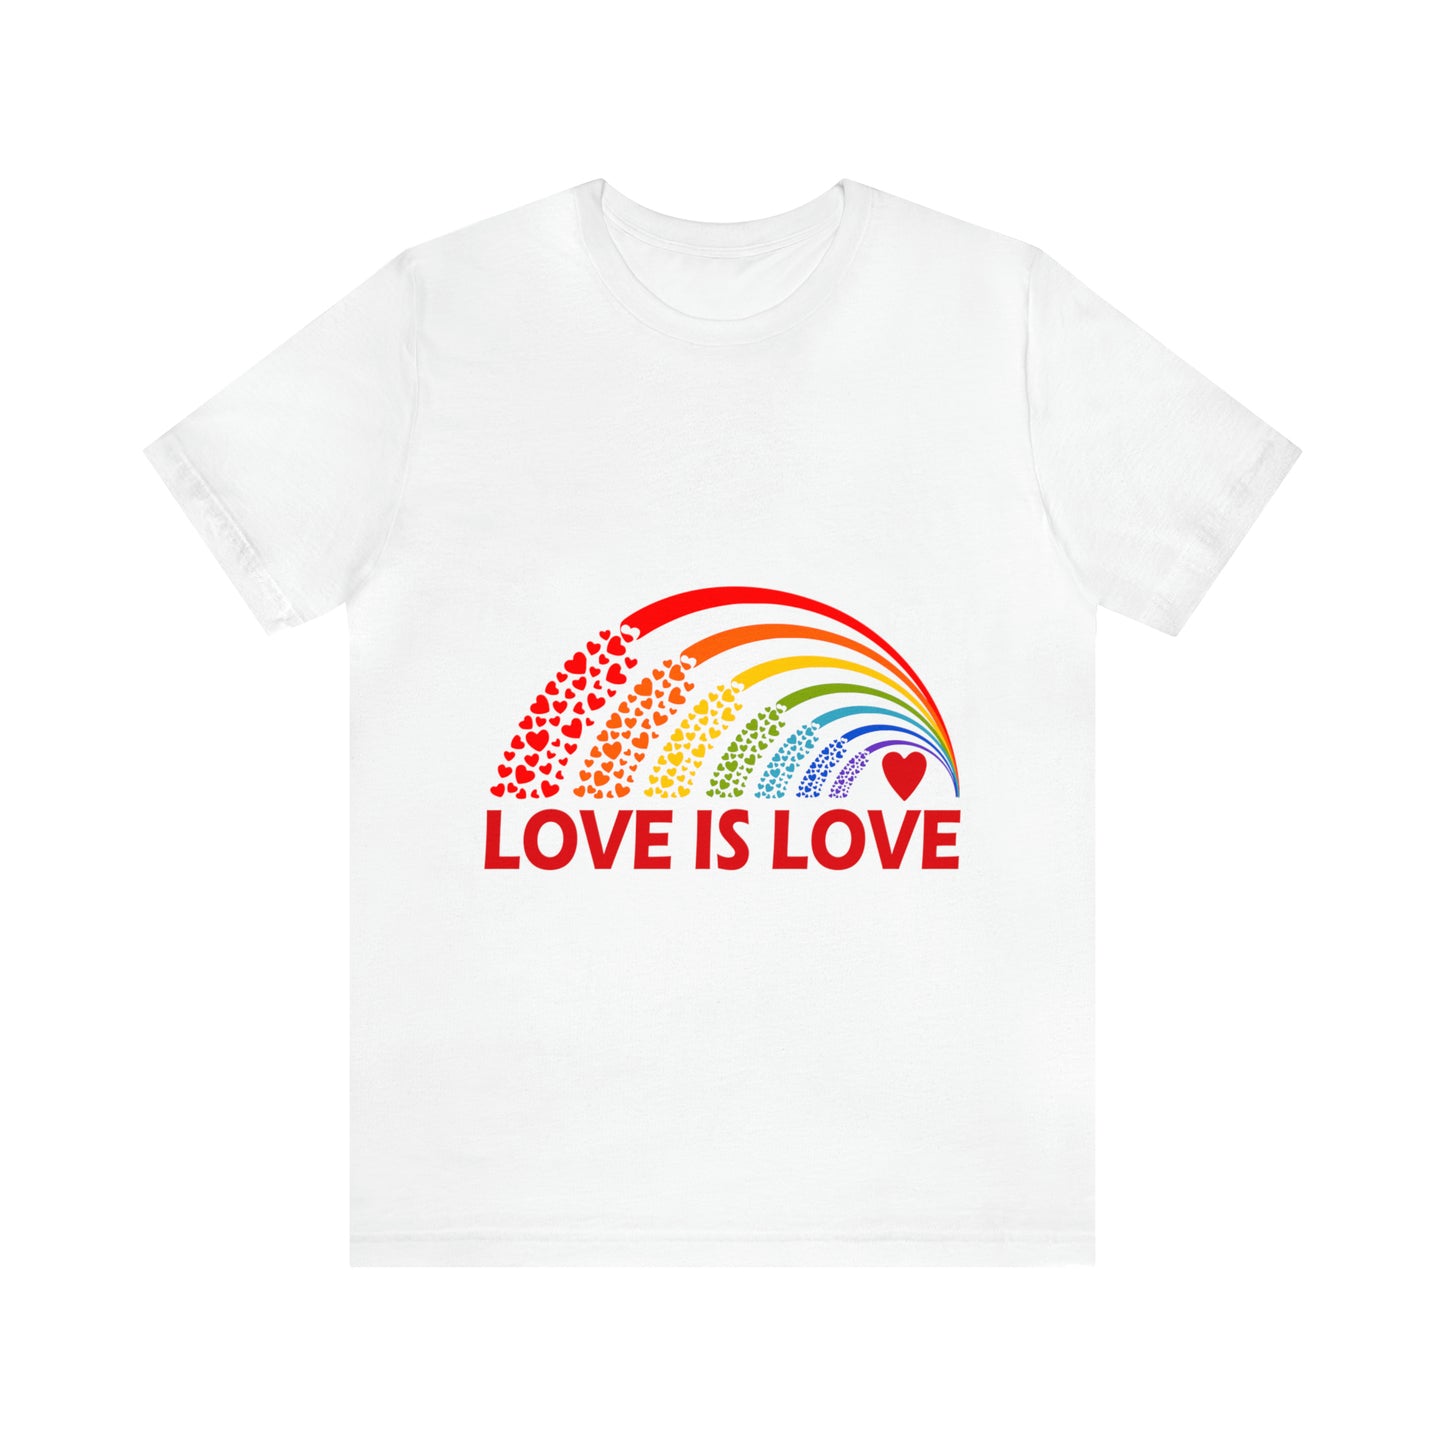 Love Is Love - Unisex T-Shirt